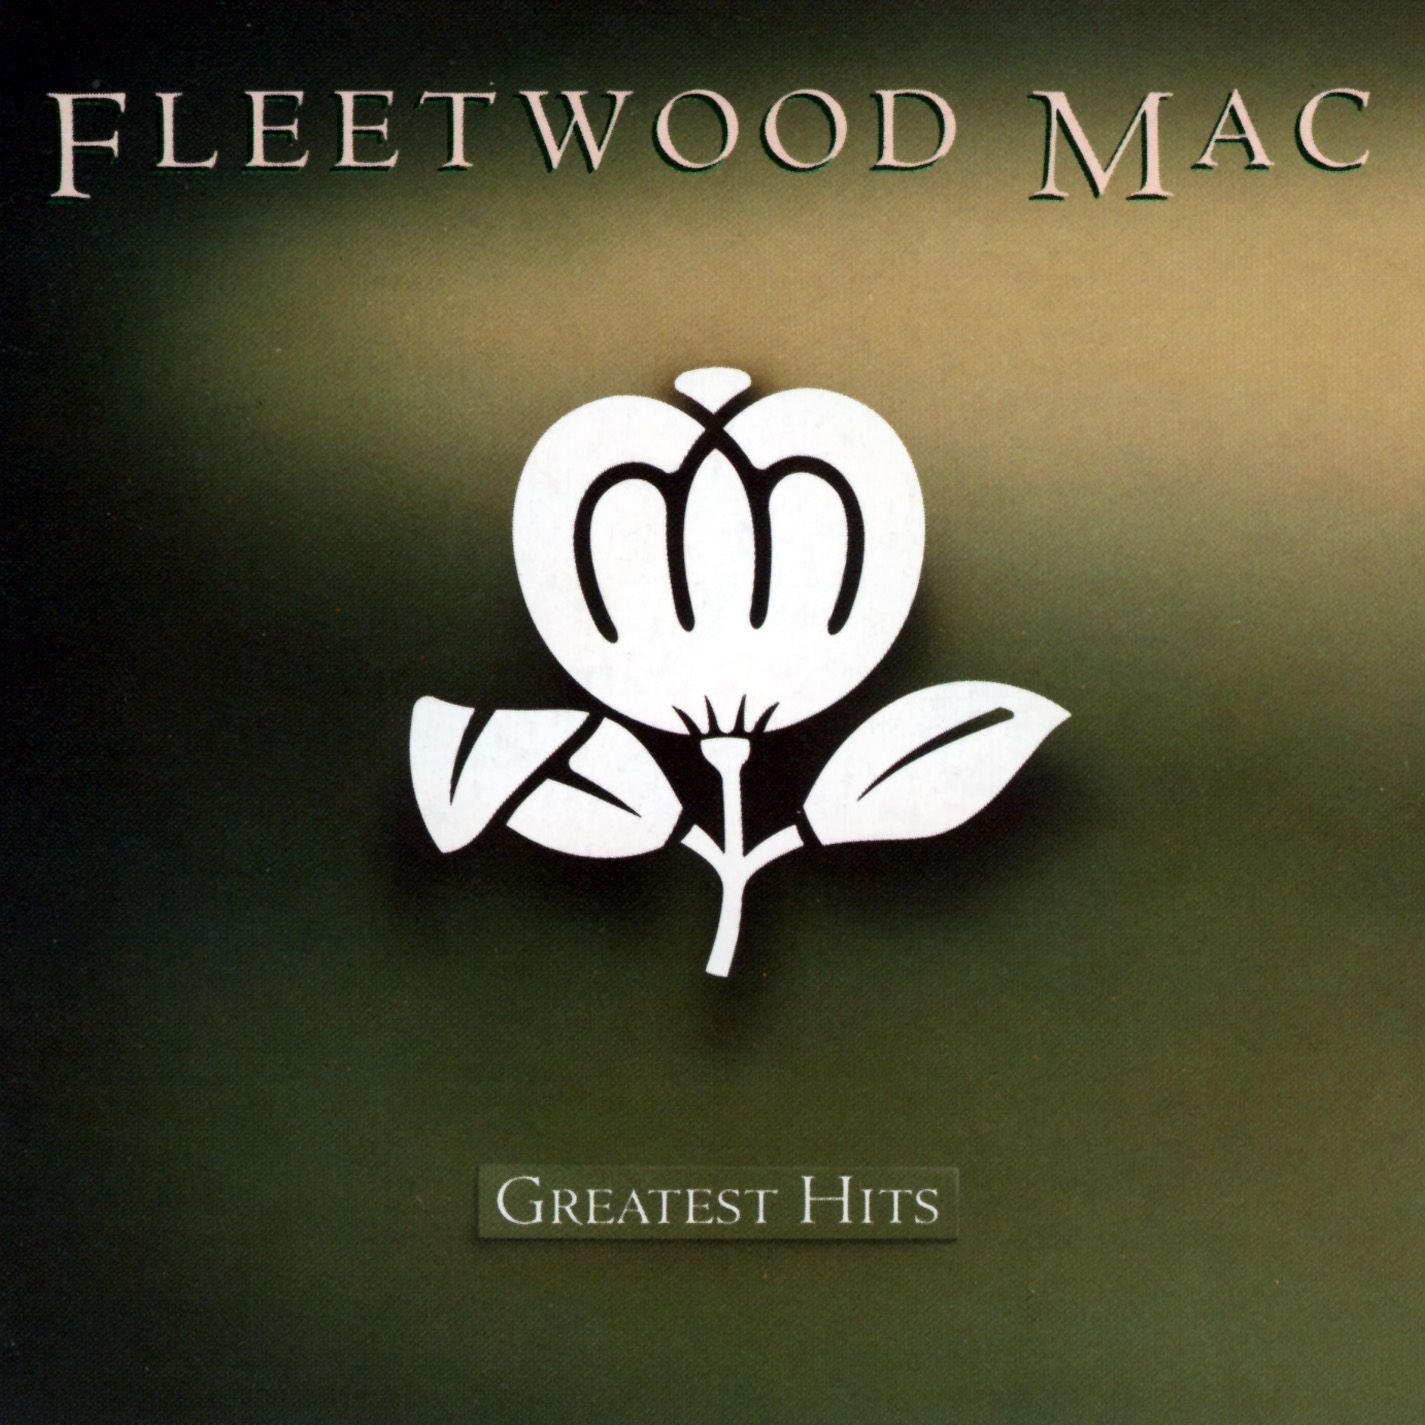 fleetwood mac album free download